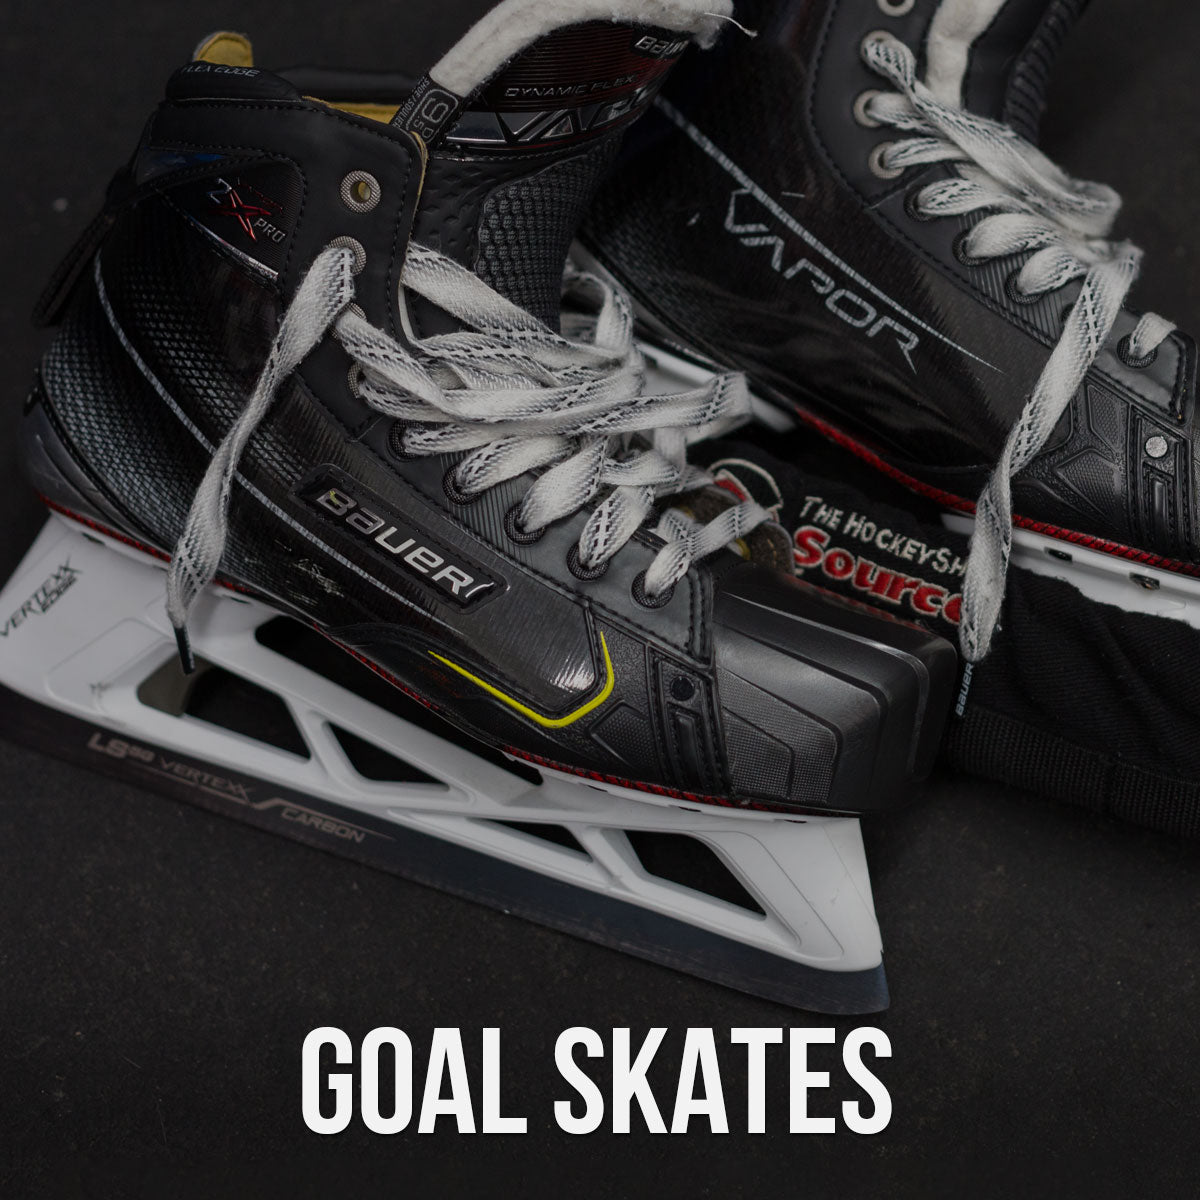 Bauer goal skates